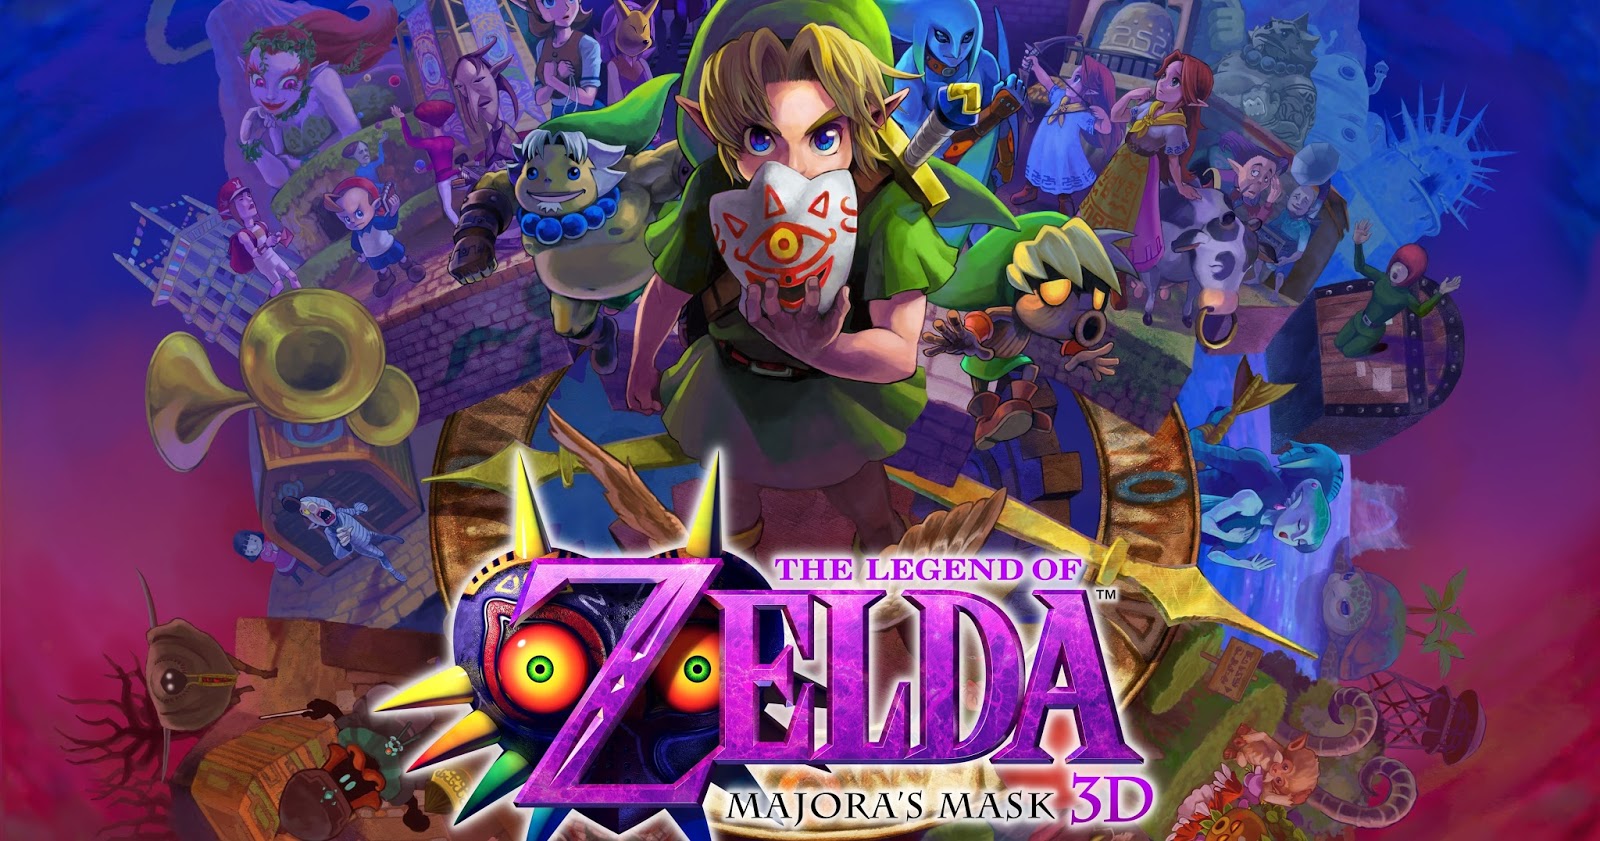 Amazing The Legend Of Zelda: Majora's Mask Pictures & Backgrounds